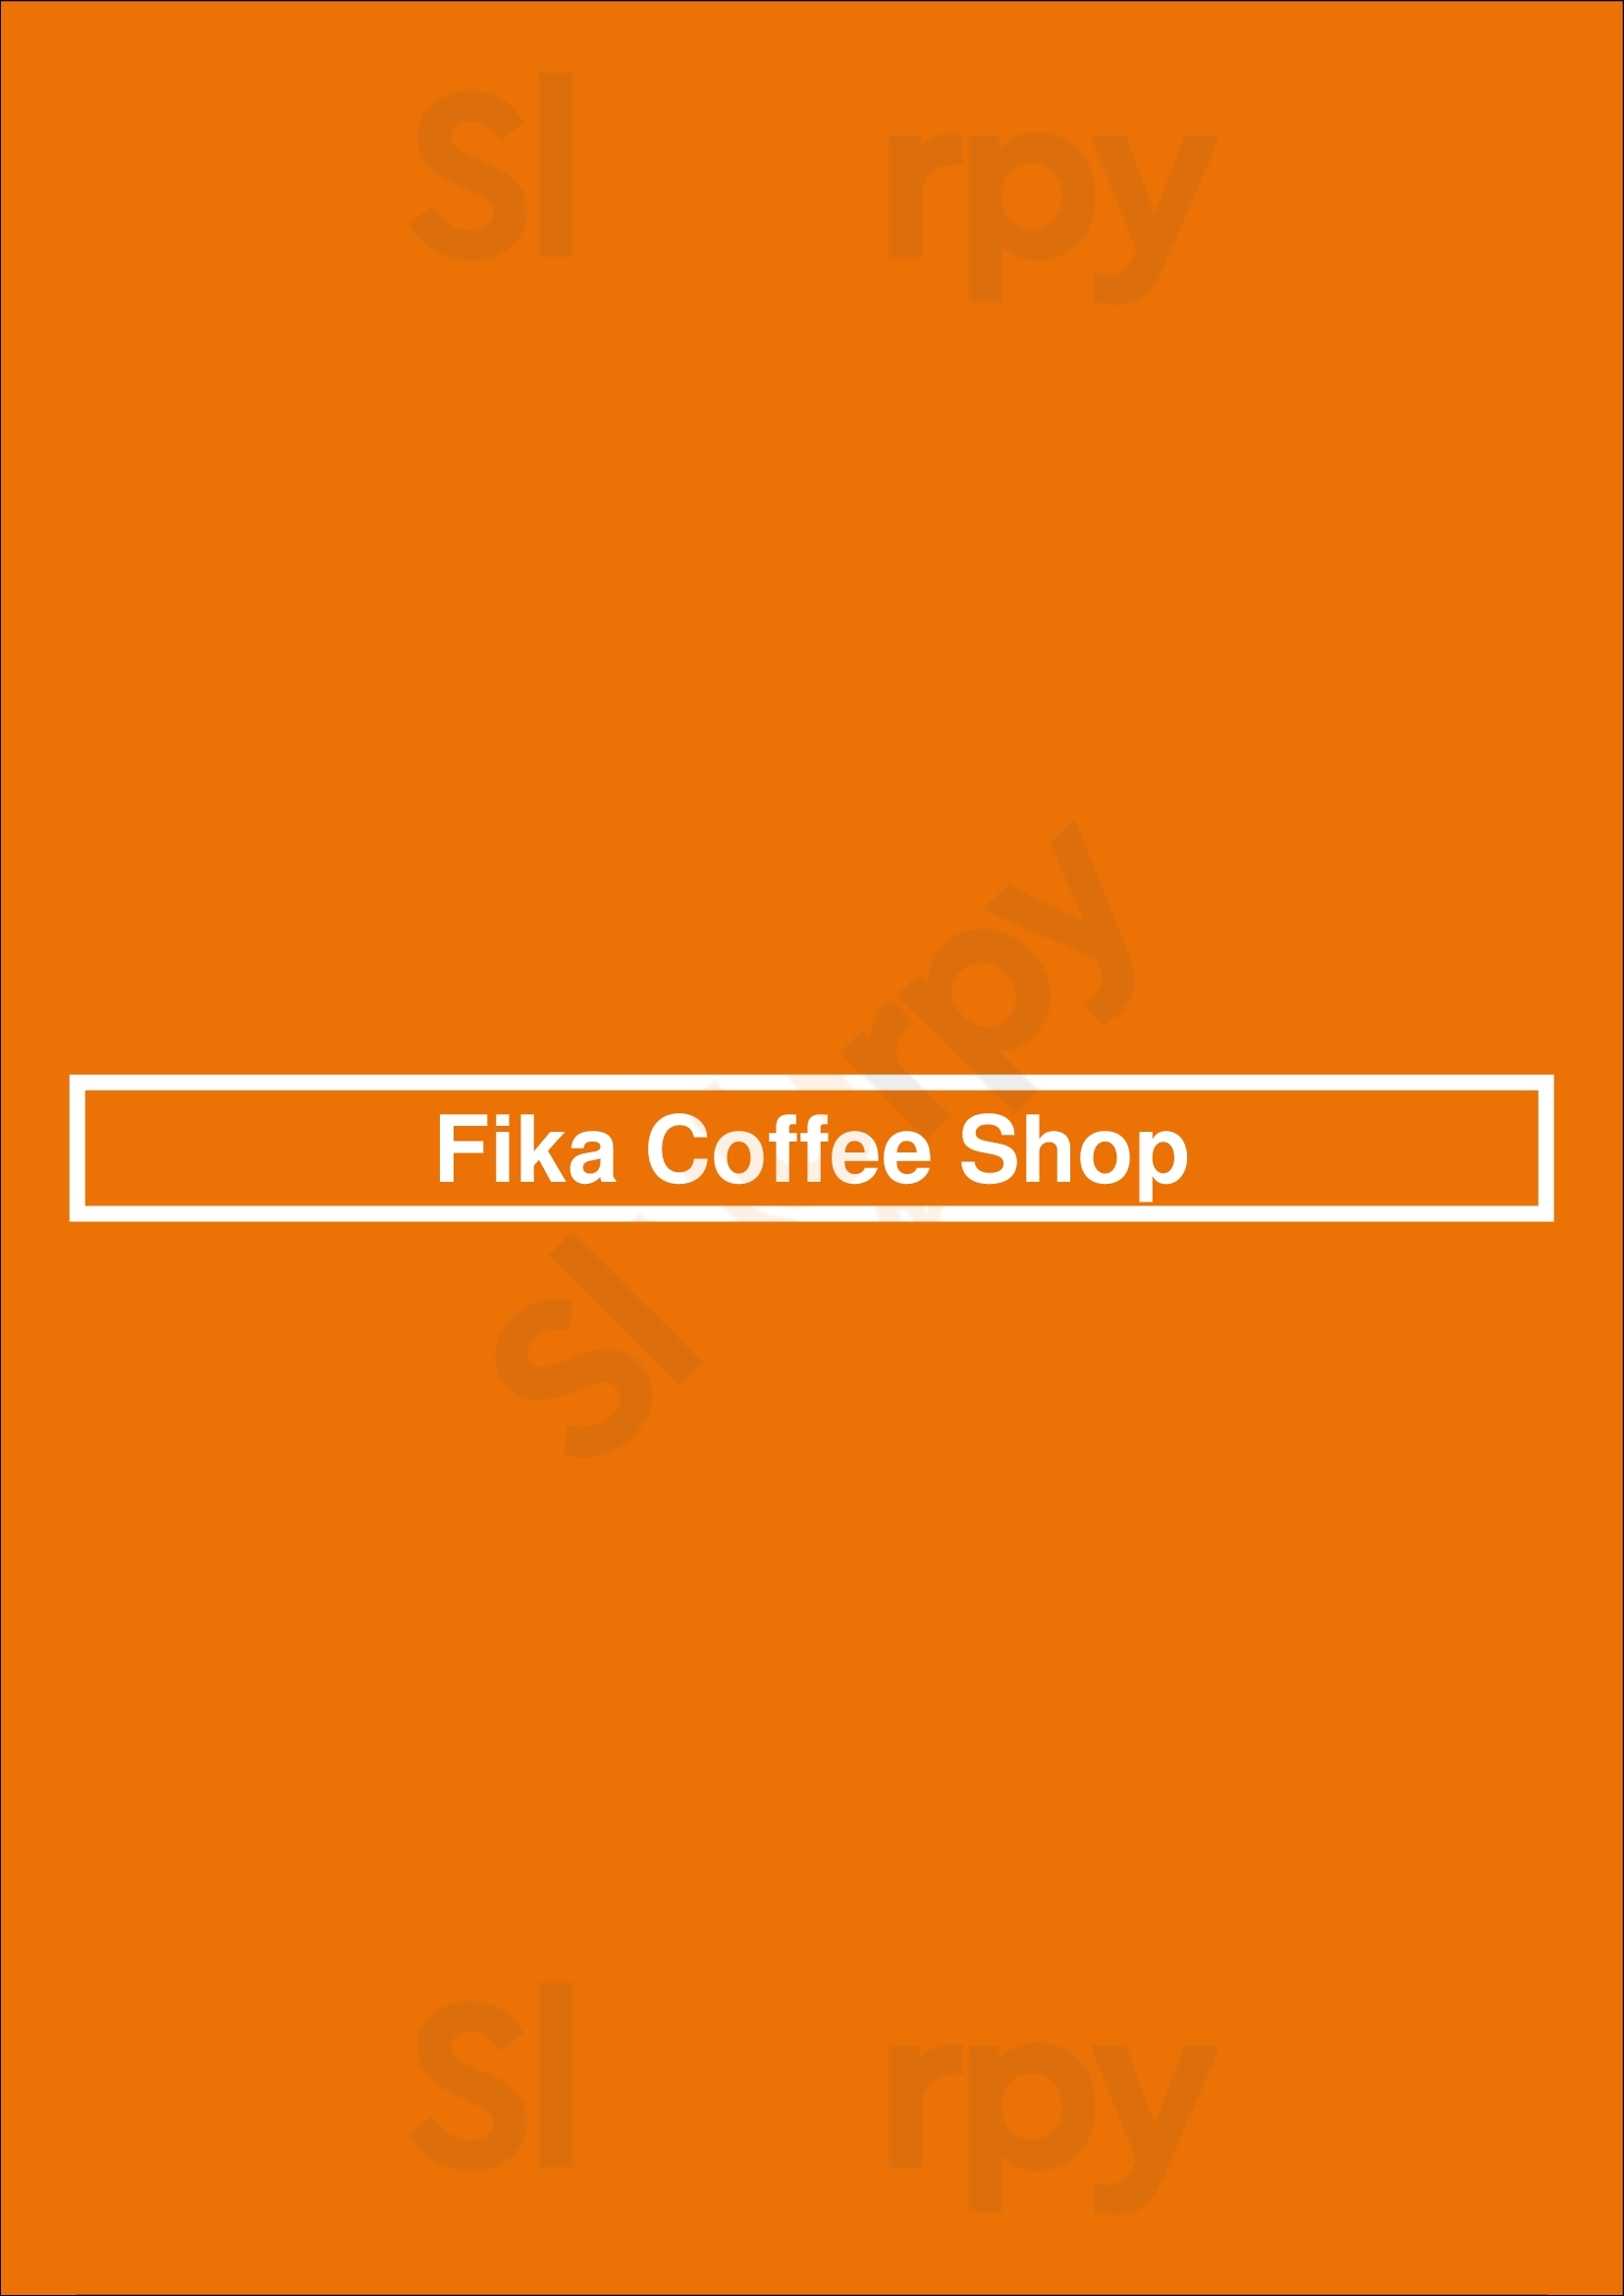 Fika Coffee Shop Parede Menu - 1